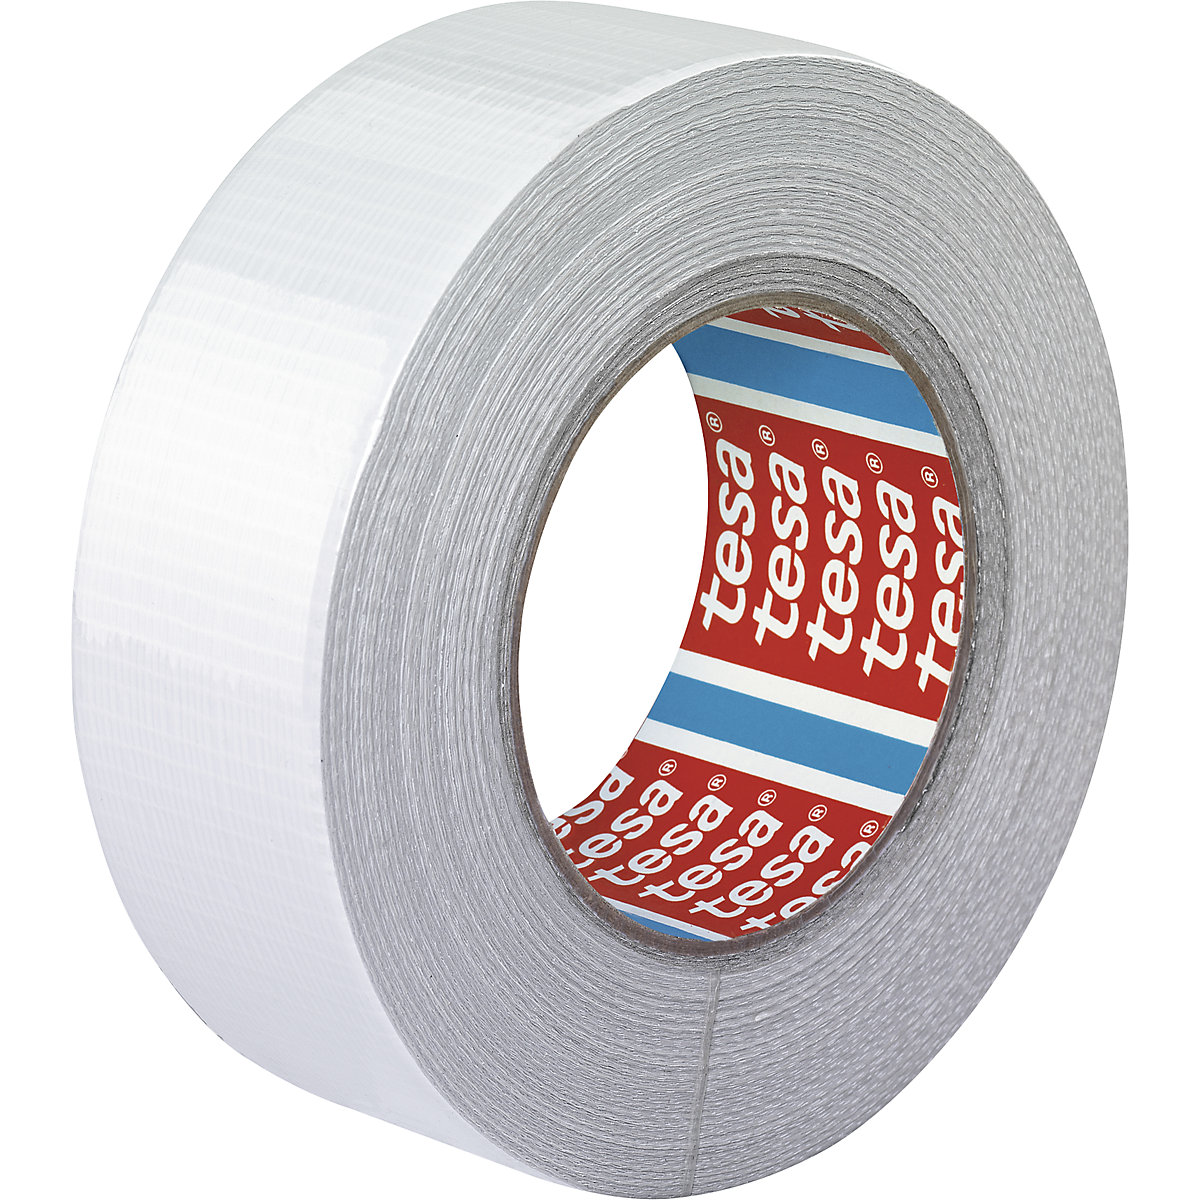 Fabric tape – tesa